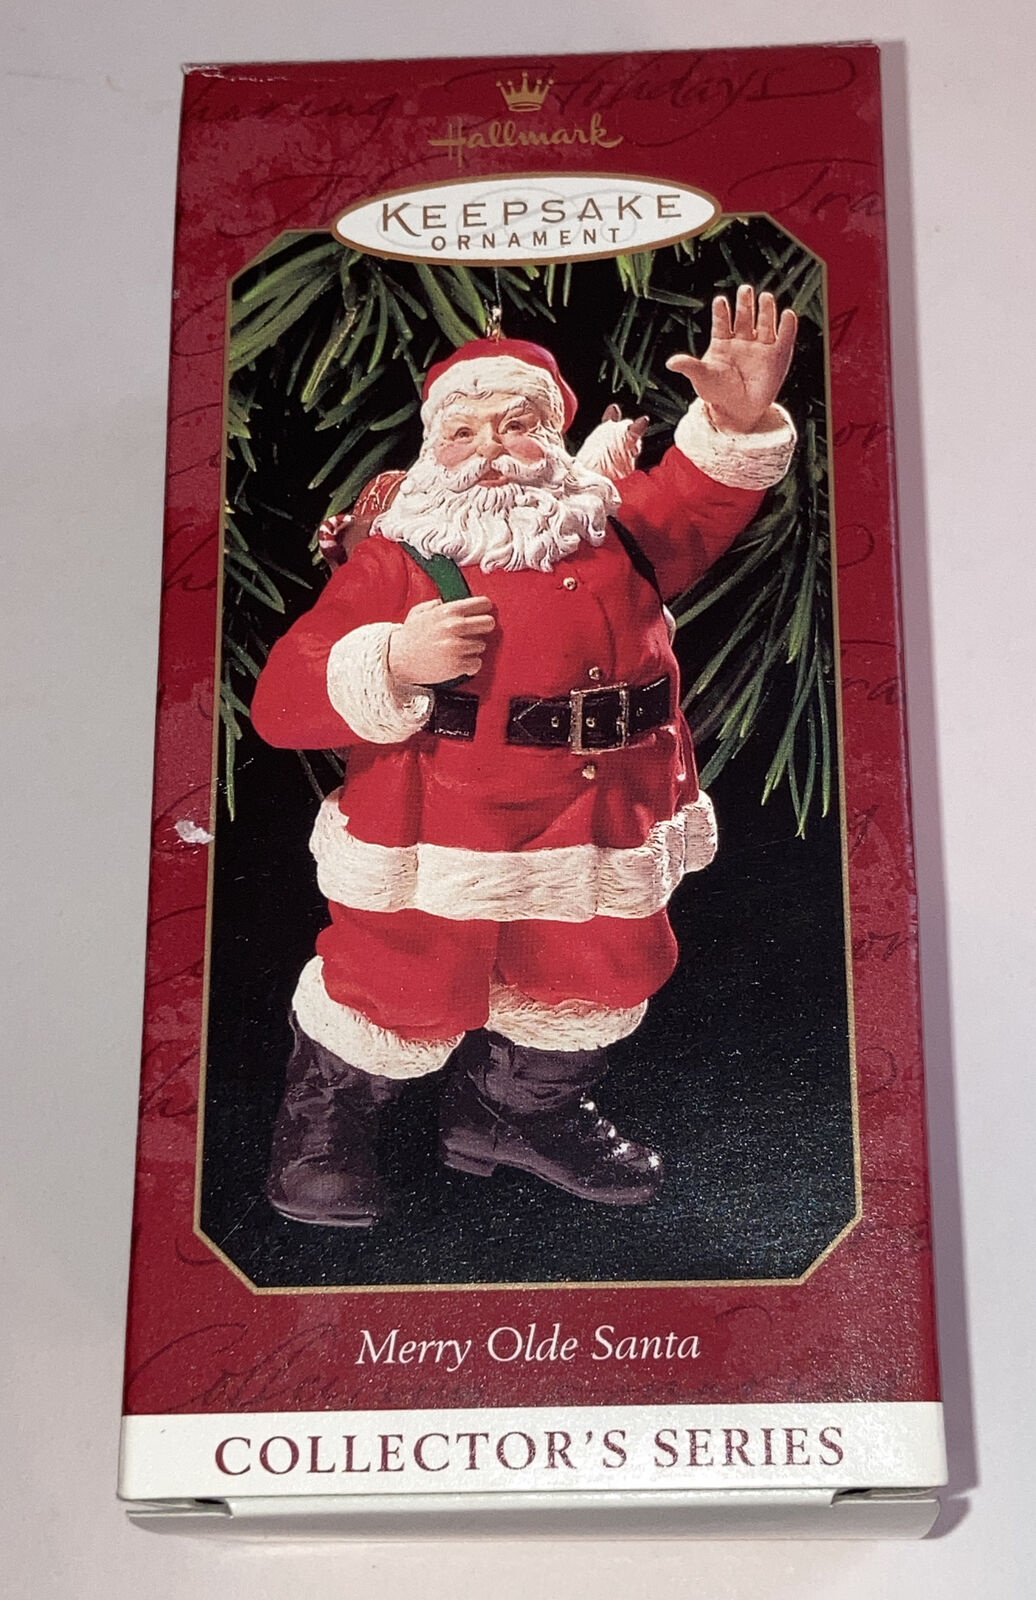 1999 Hallmark Keepsake Ornament Merry Olde Santa 10th & Final in Series Santa U5